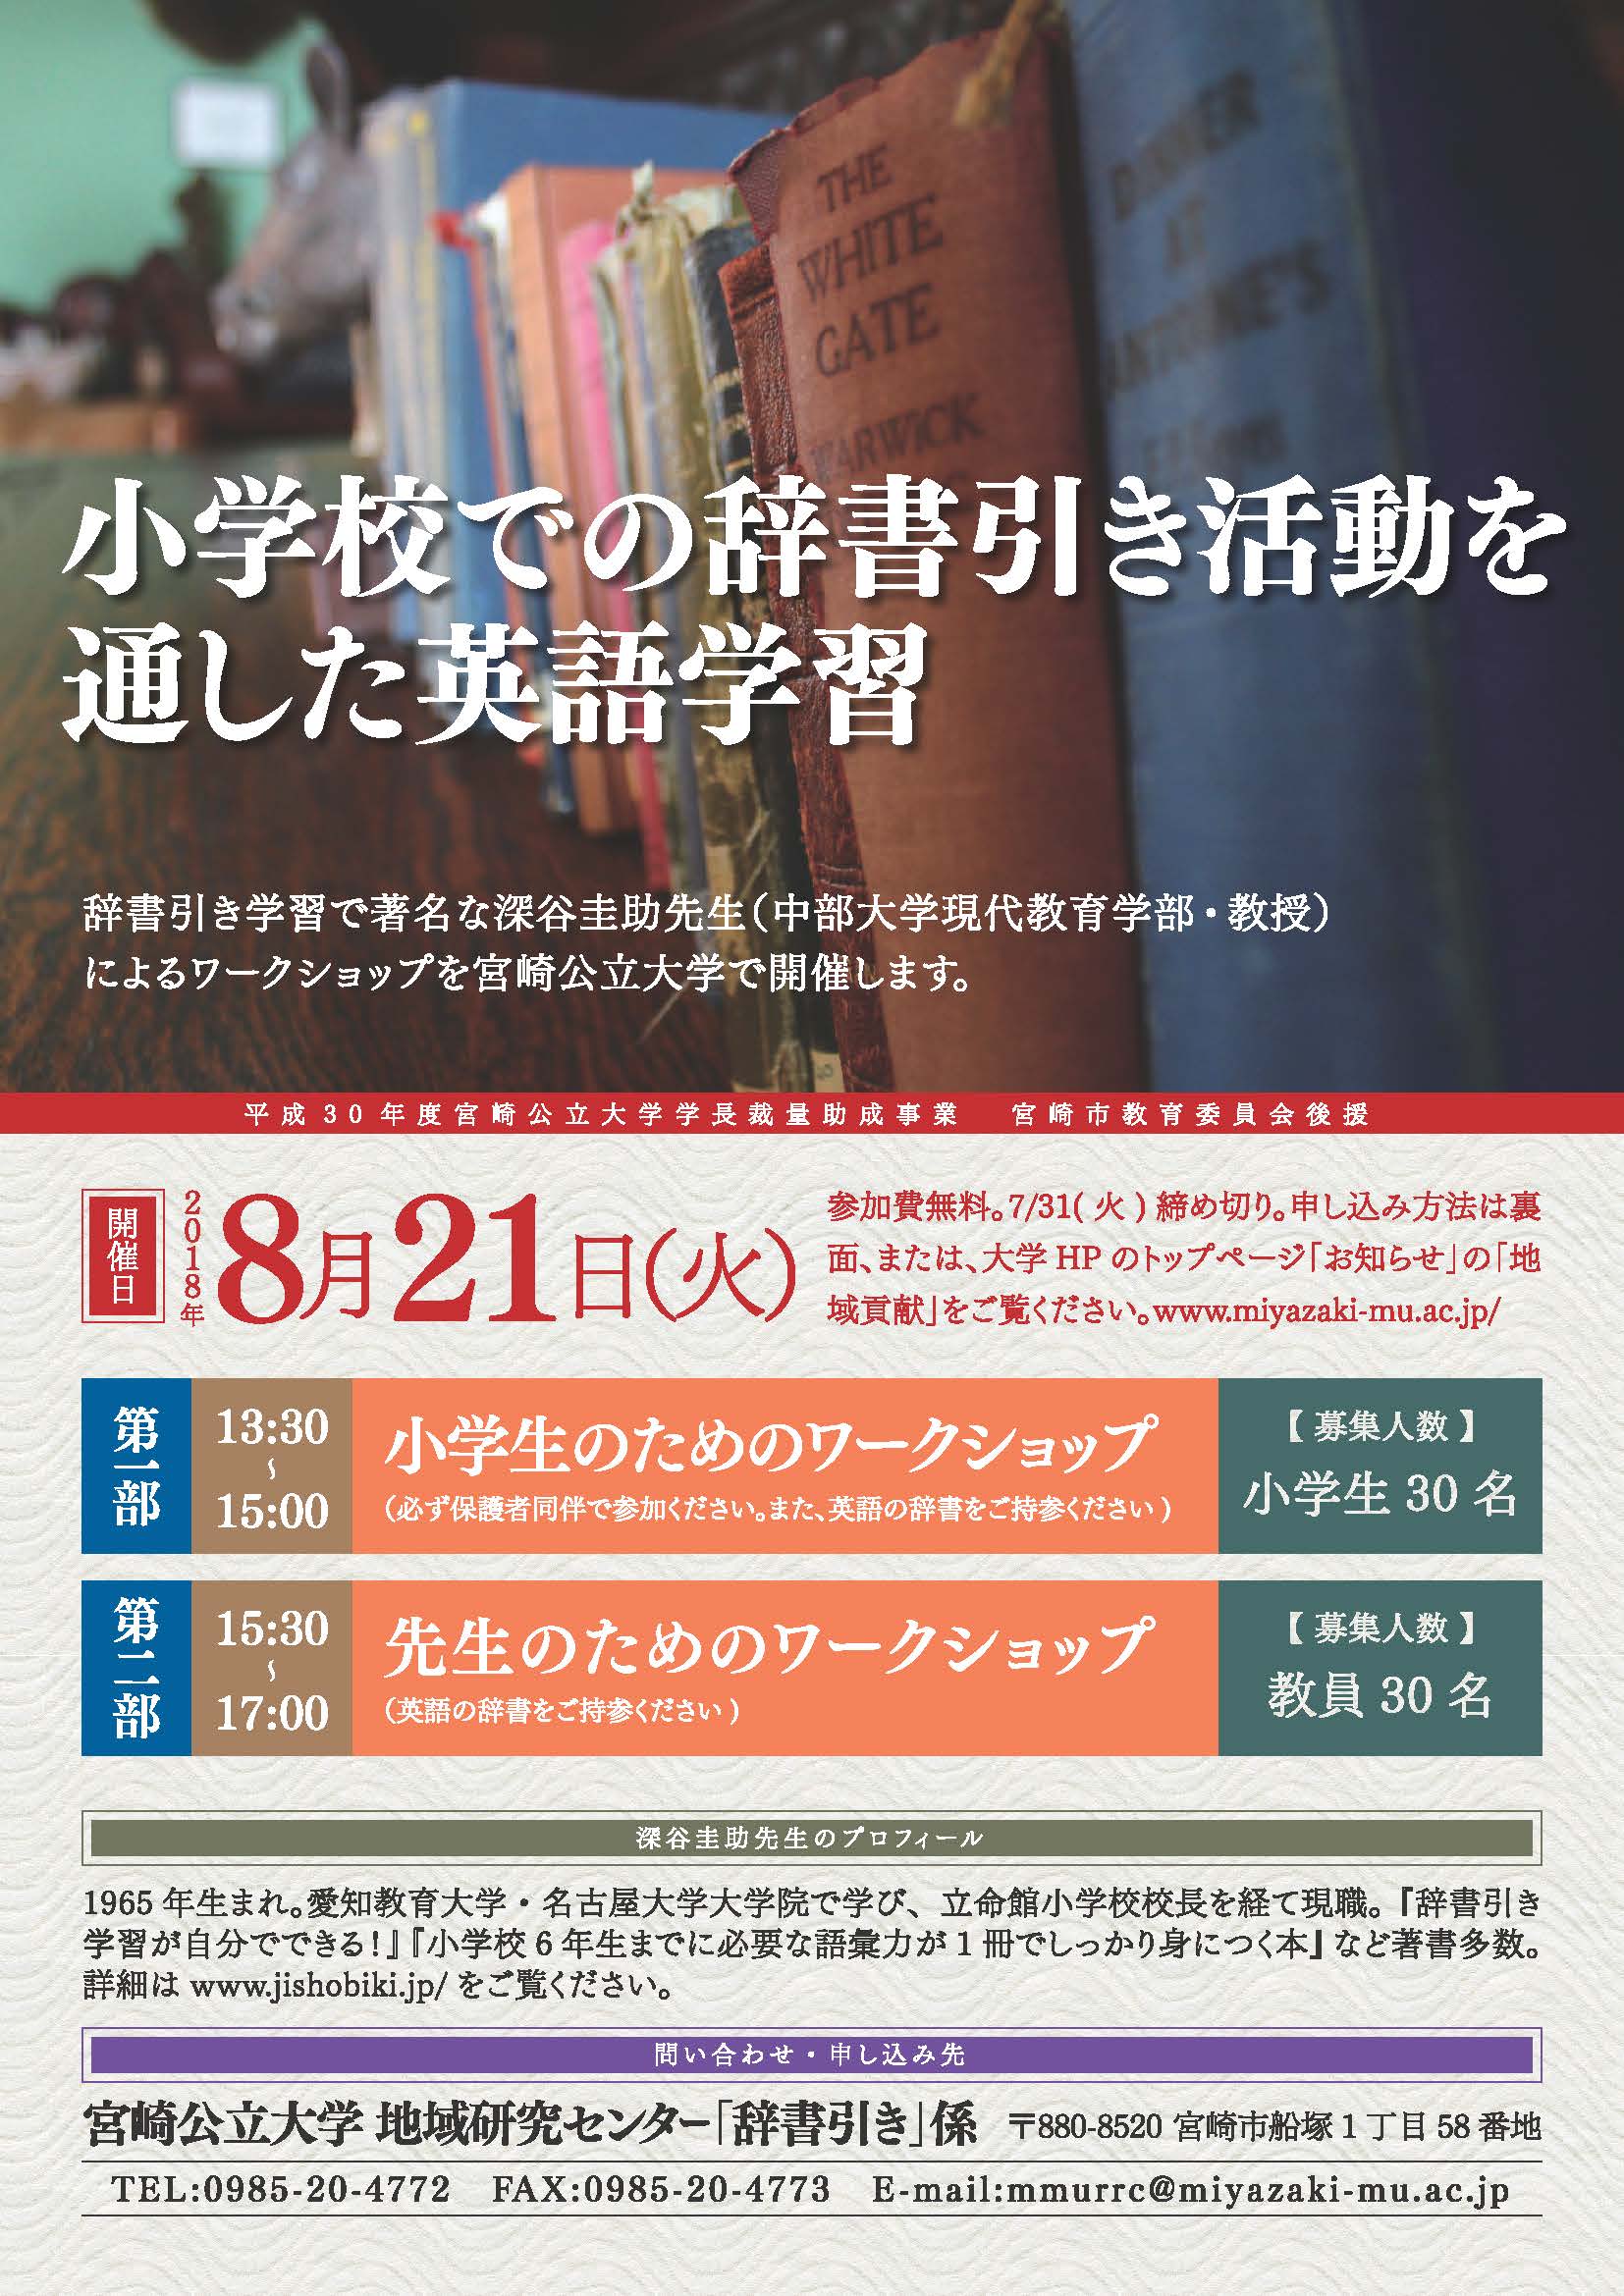 https://www.miyazaki-mu.ac.jp/info/uploads/workshop_flyer.jpg